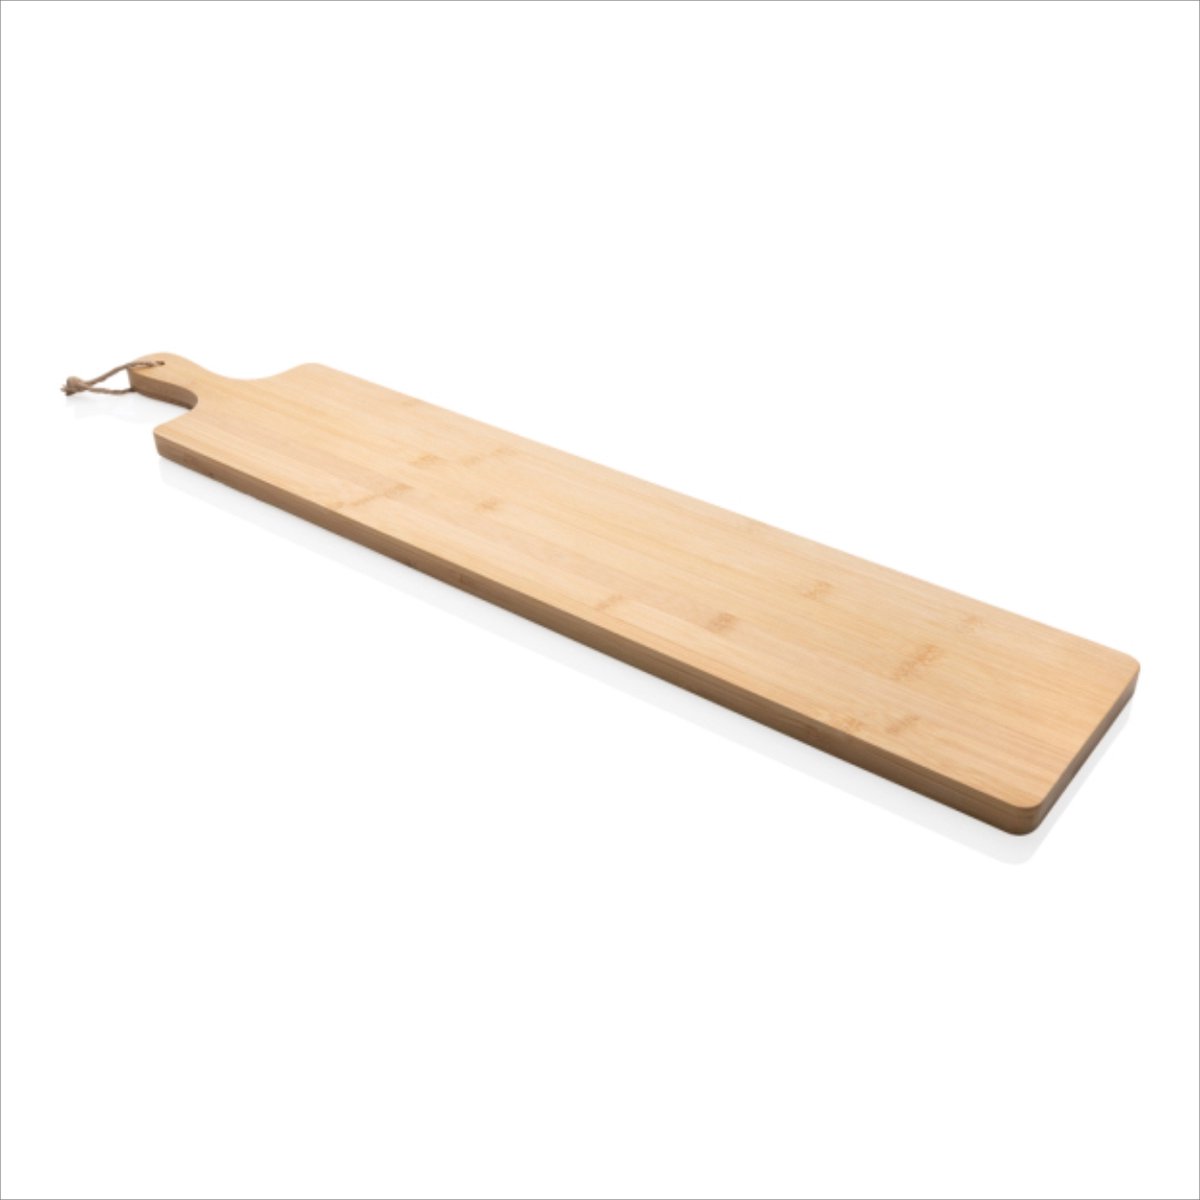 Borrelplank XXL - Hapjesplank - Tapasplank - Kaasplank - Serveerplank - Bamboe - Houtlook - 115 Centimeter - Rechthoek - Borrel - Plank - Lang